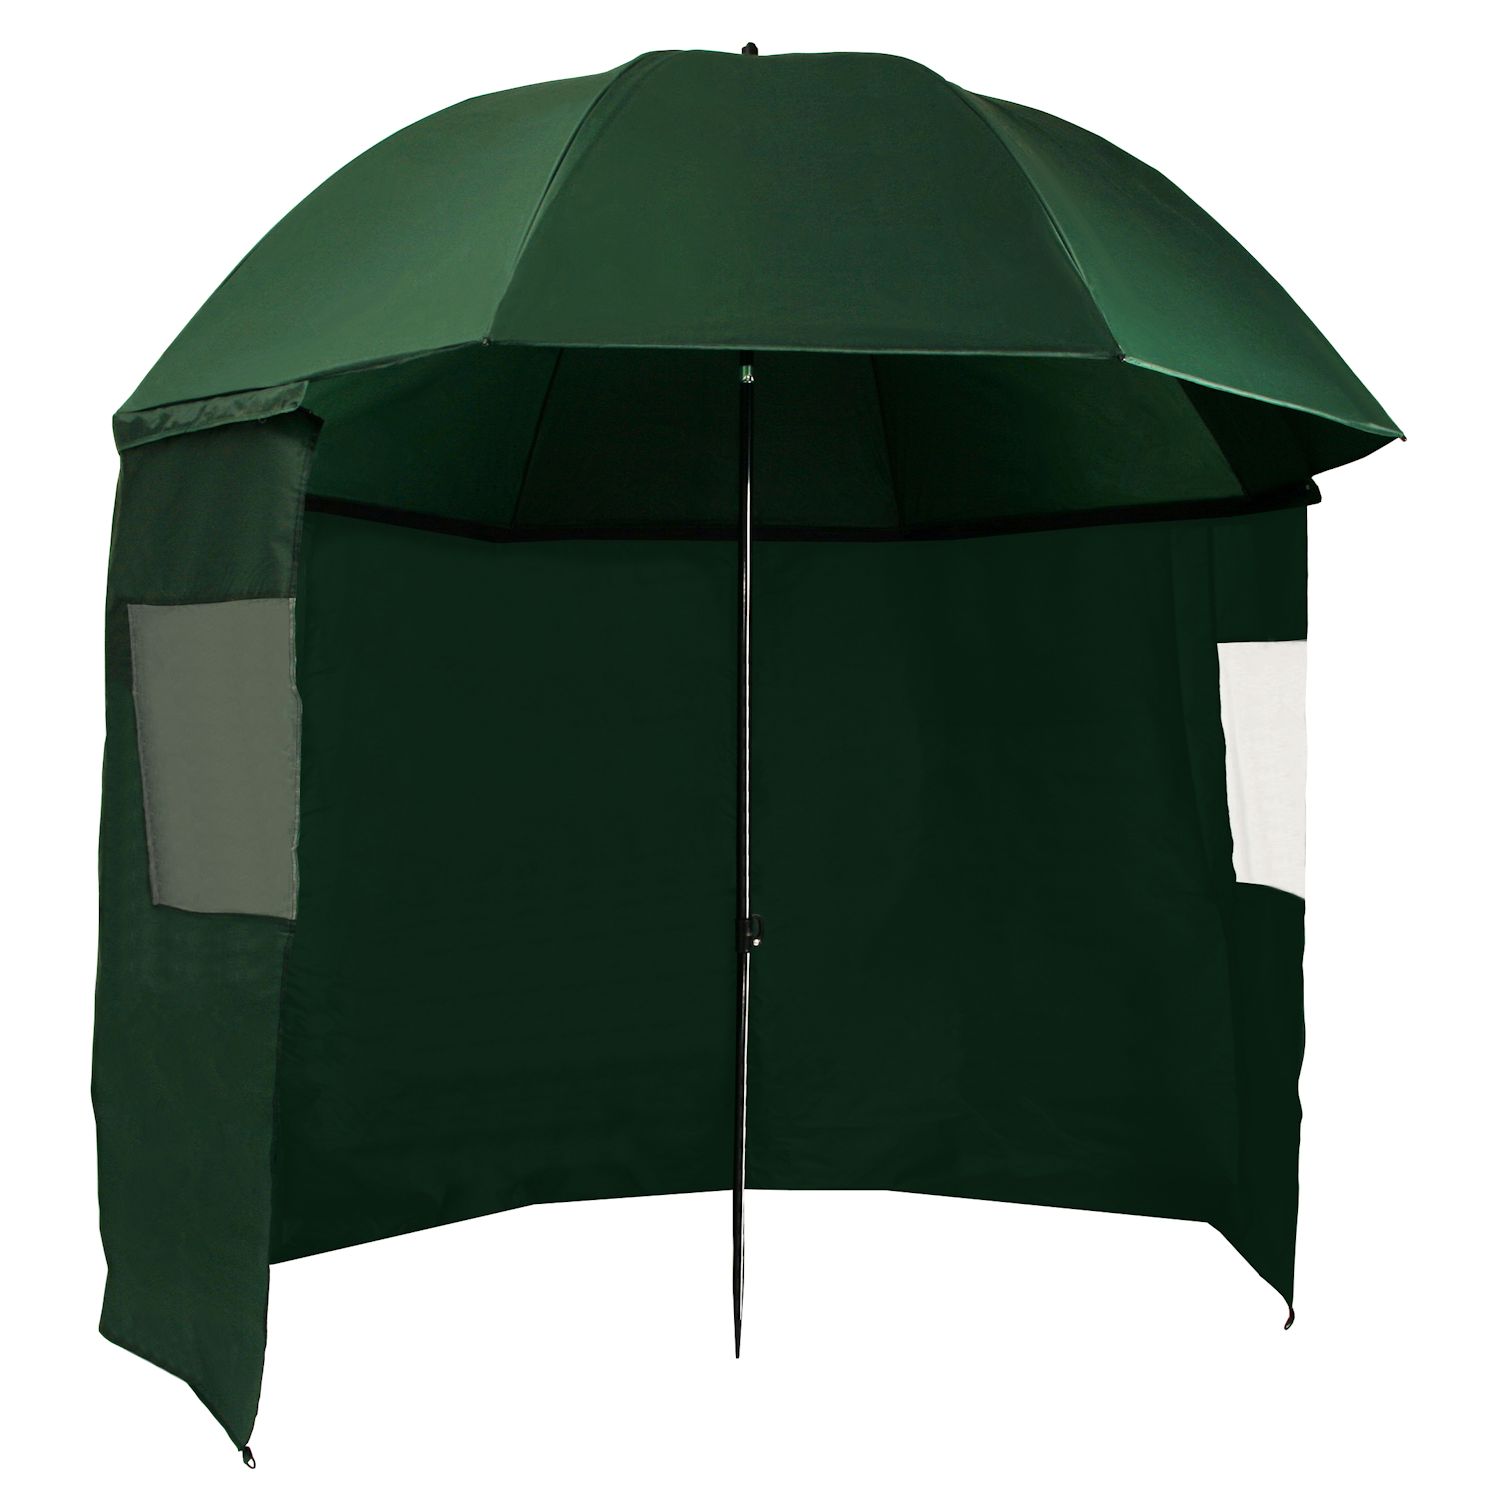 Angelschirm Schirmzelt mit Umhang Angelzelt Sonnenschutz Regenschirm Zipper I3M7 